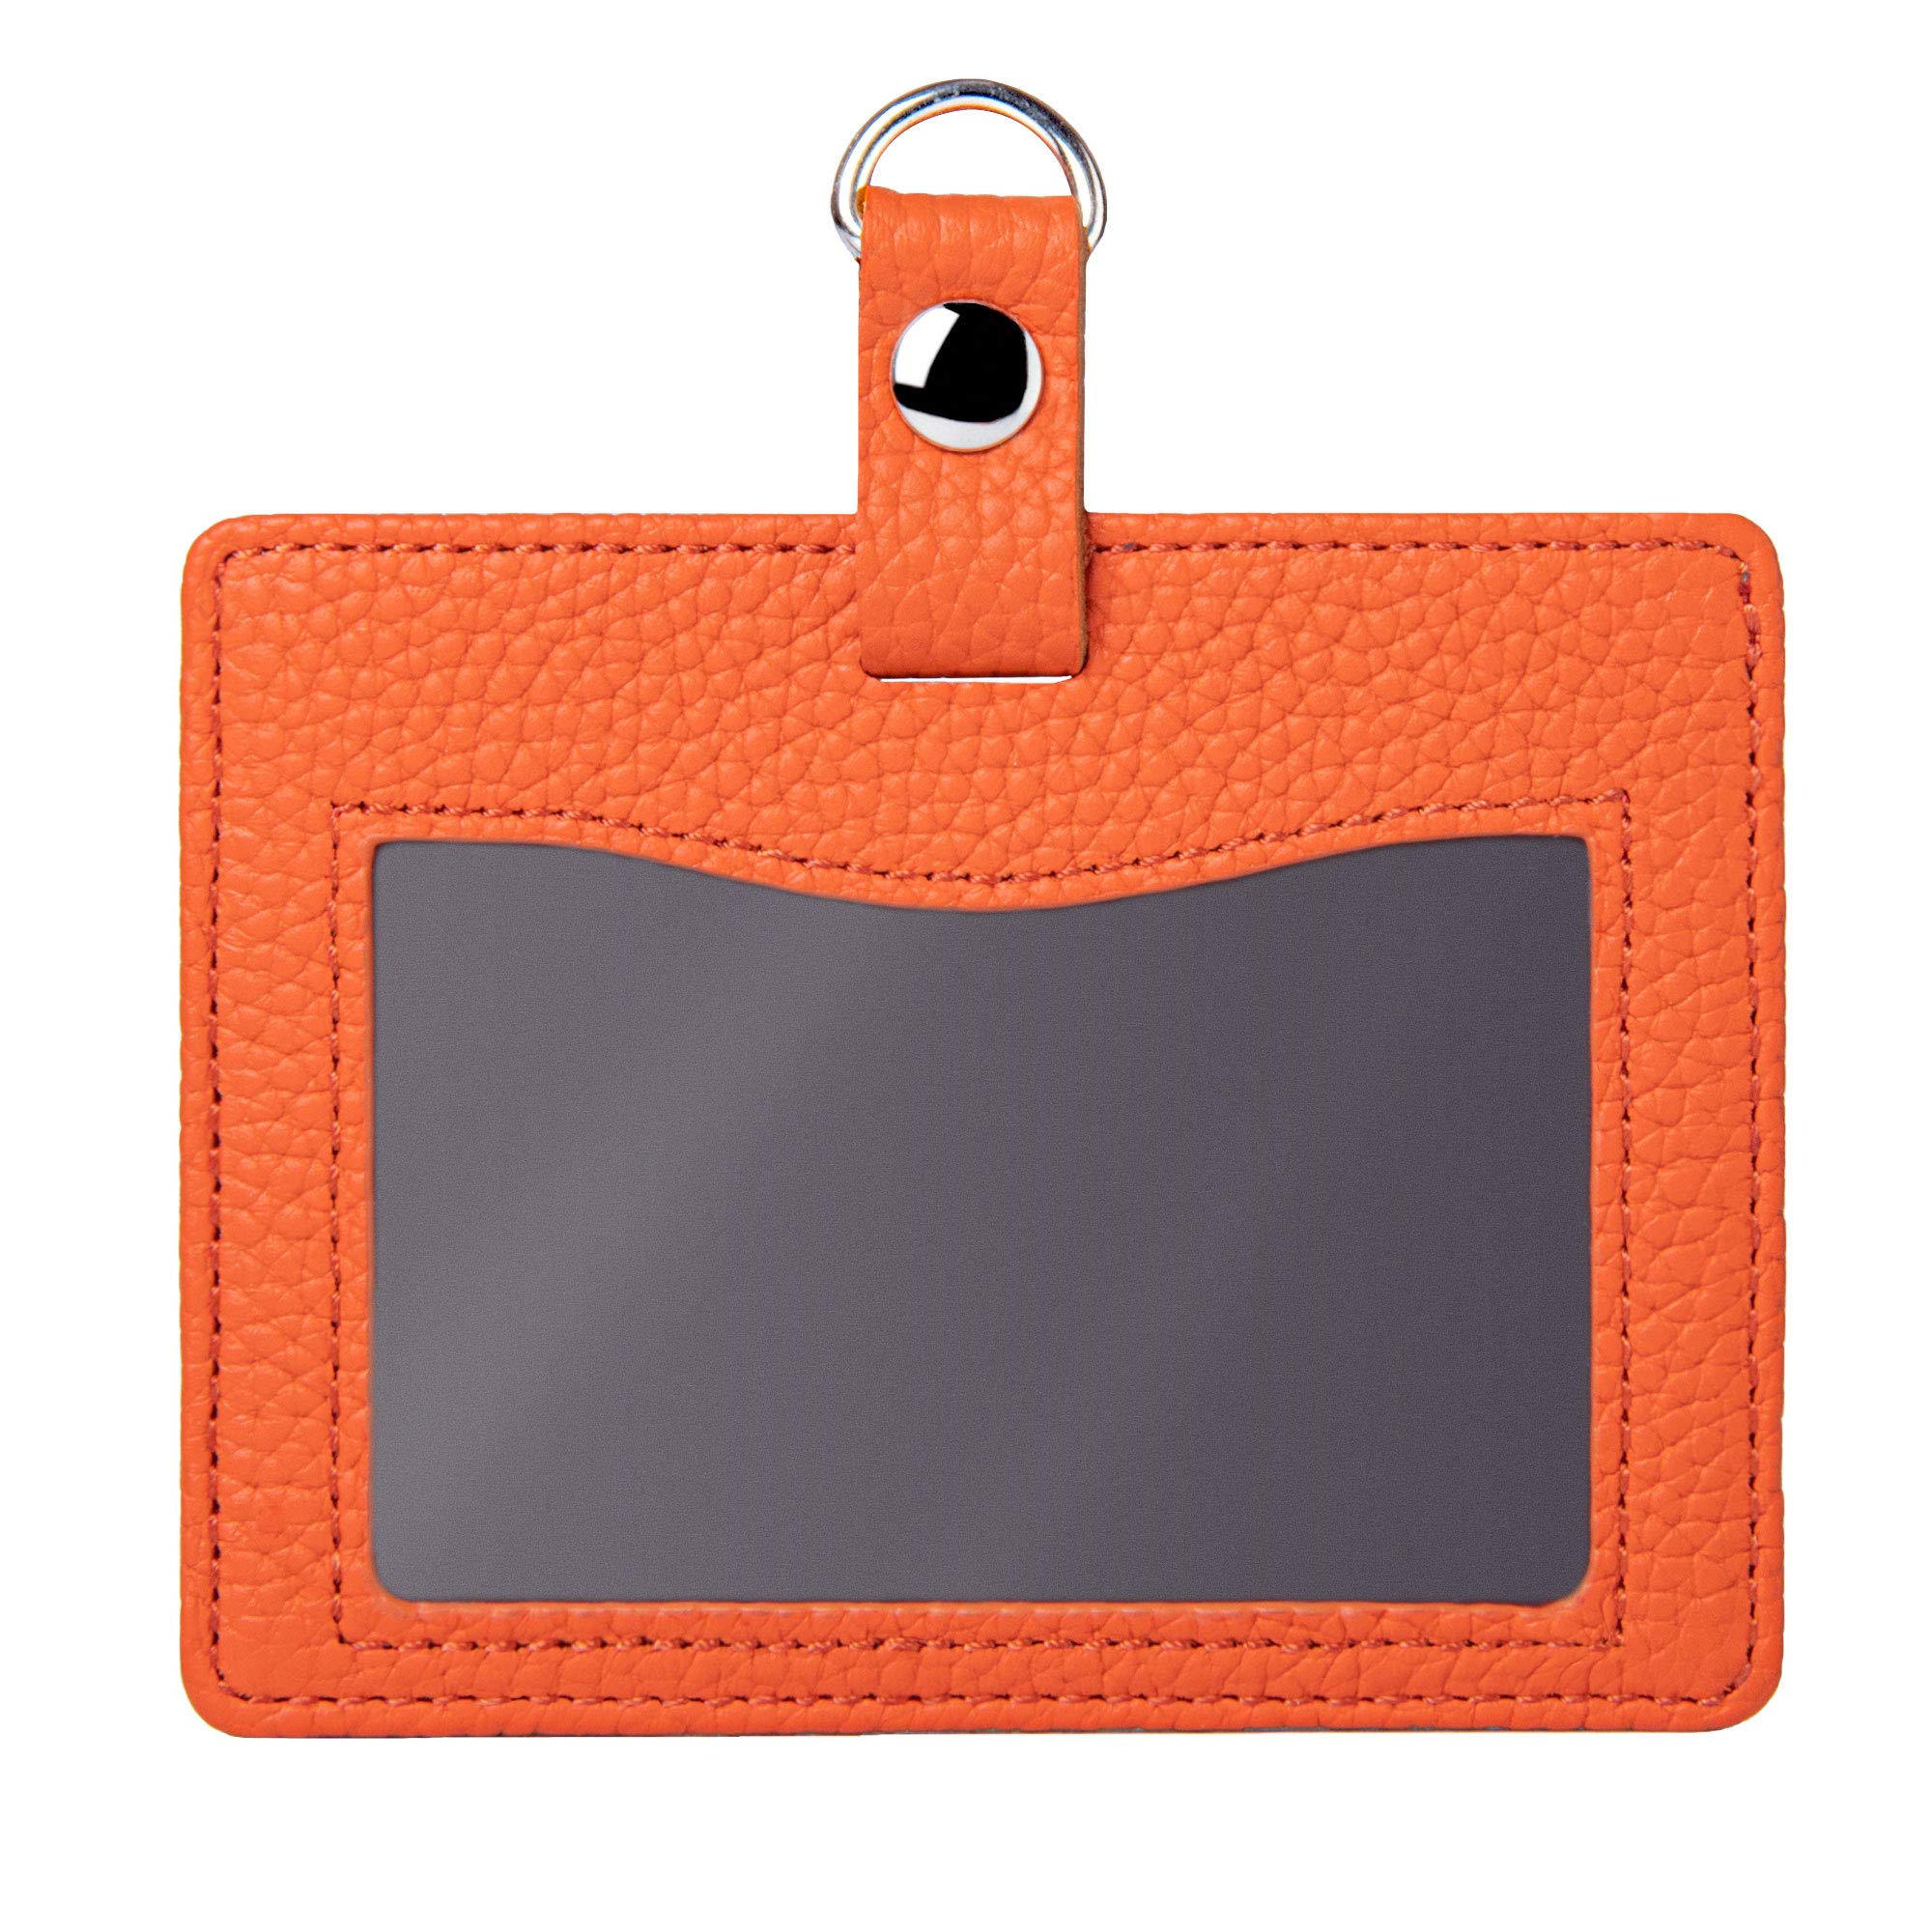 [HANATORA] 本革 IDカードホルダー IDカードケース パスケース 定期入れ カード入れ シュリンクカーフレザー ハンドメイド ギフトにも最適品 薄型 メンズ レディース ユニセックス Edel HCC04 橙色 オレンジ Orange